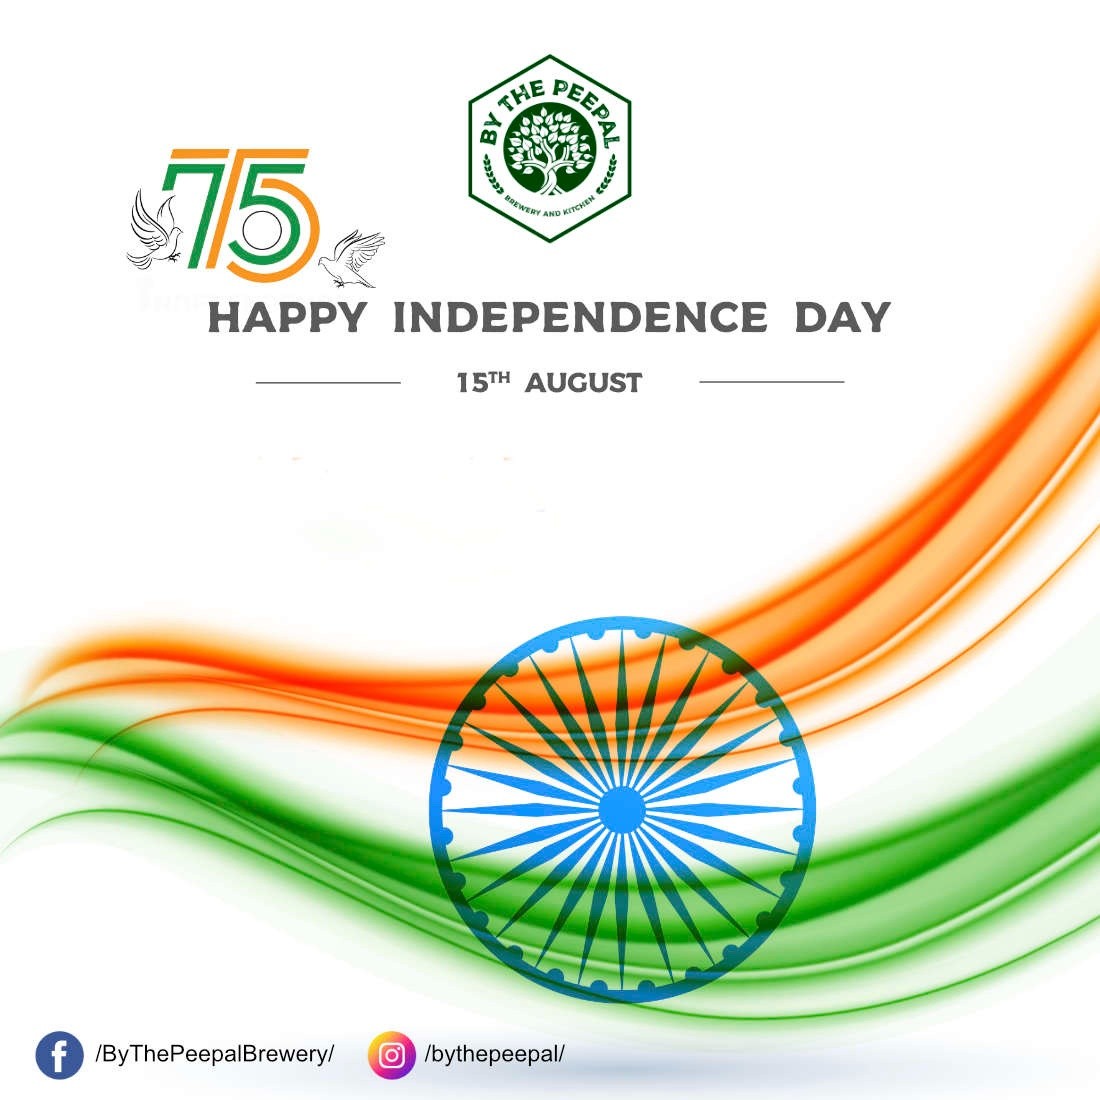 Indian Independence Day Celebrations Social Media Posts Image 1